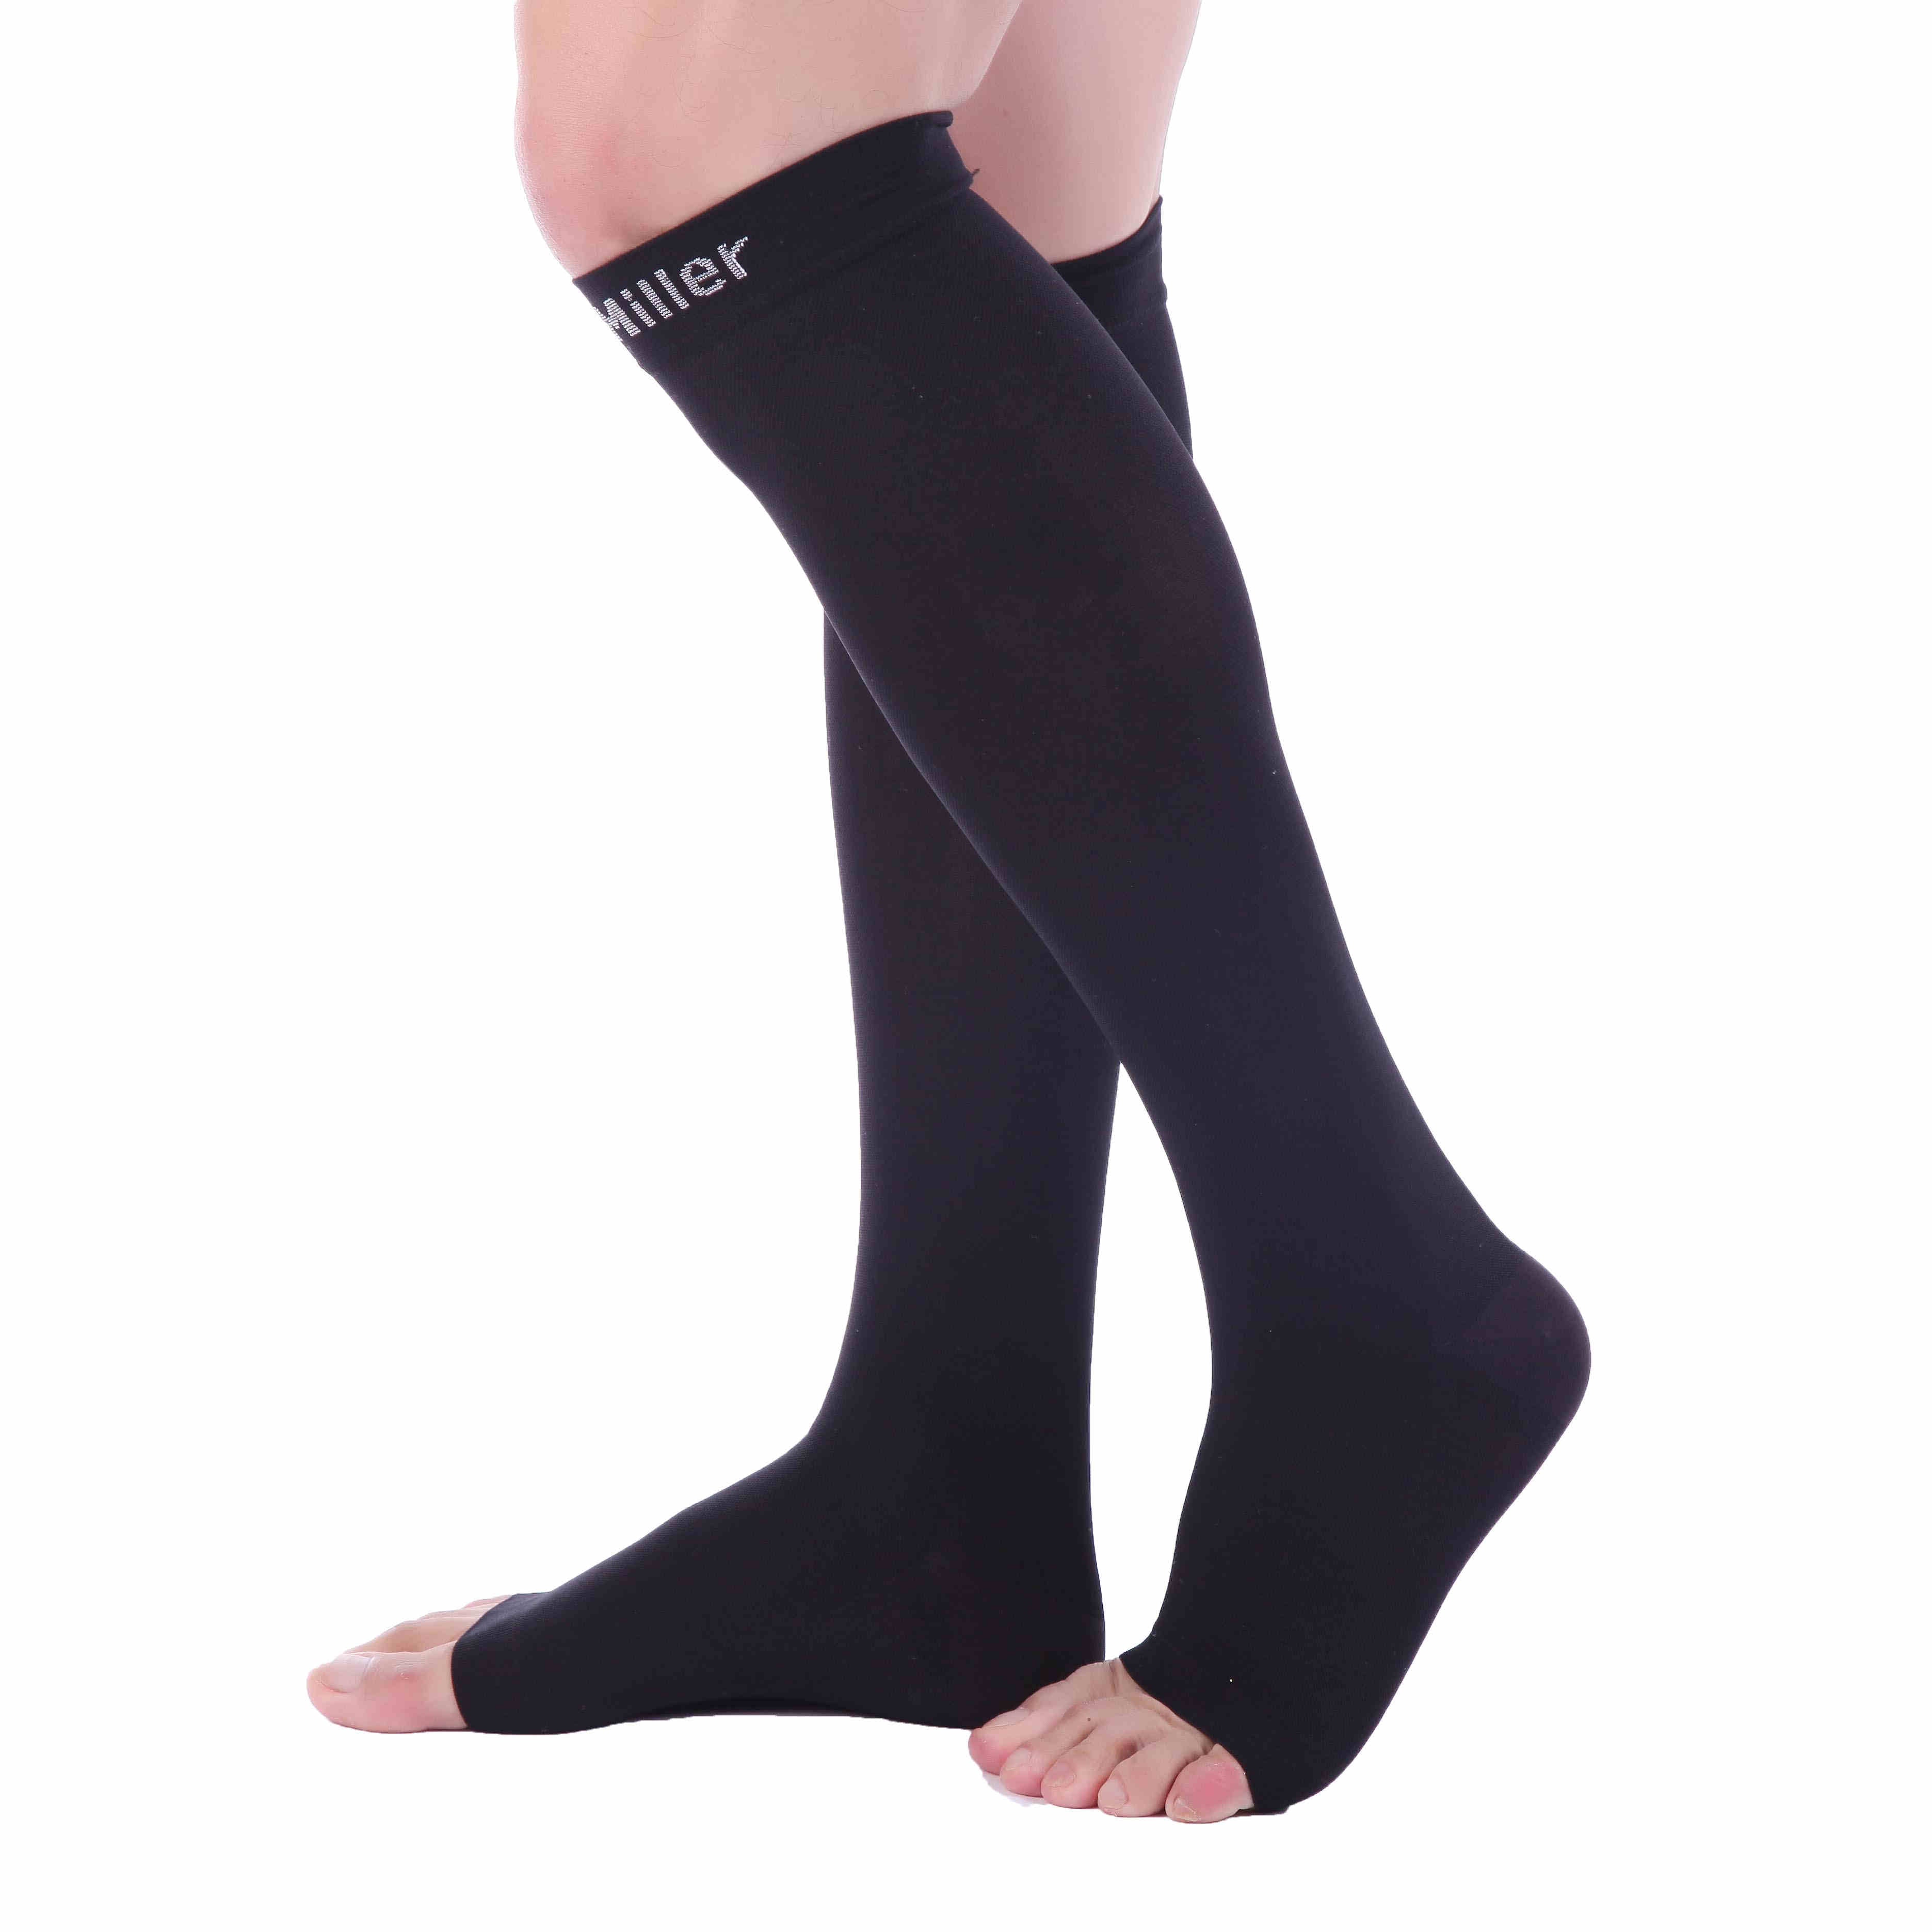 Open Toe &Ted Hose Compression Socks & Stockings – Doc Miller